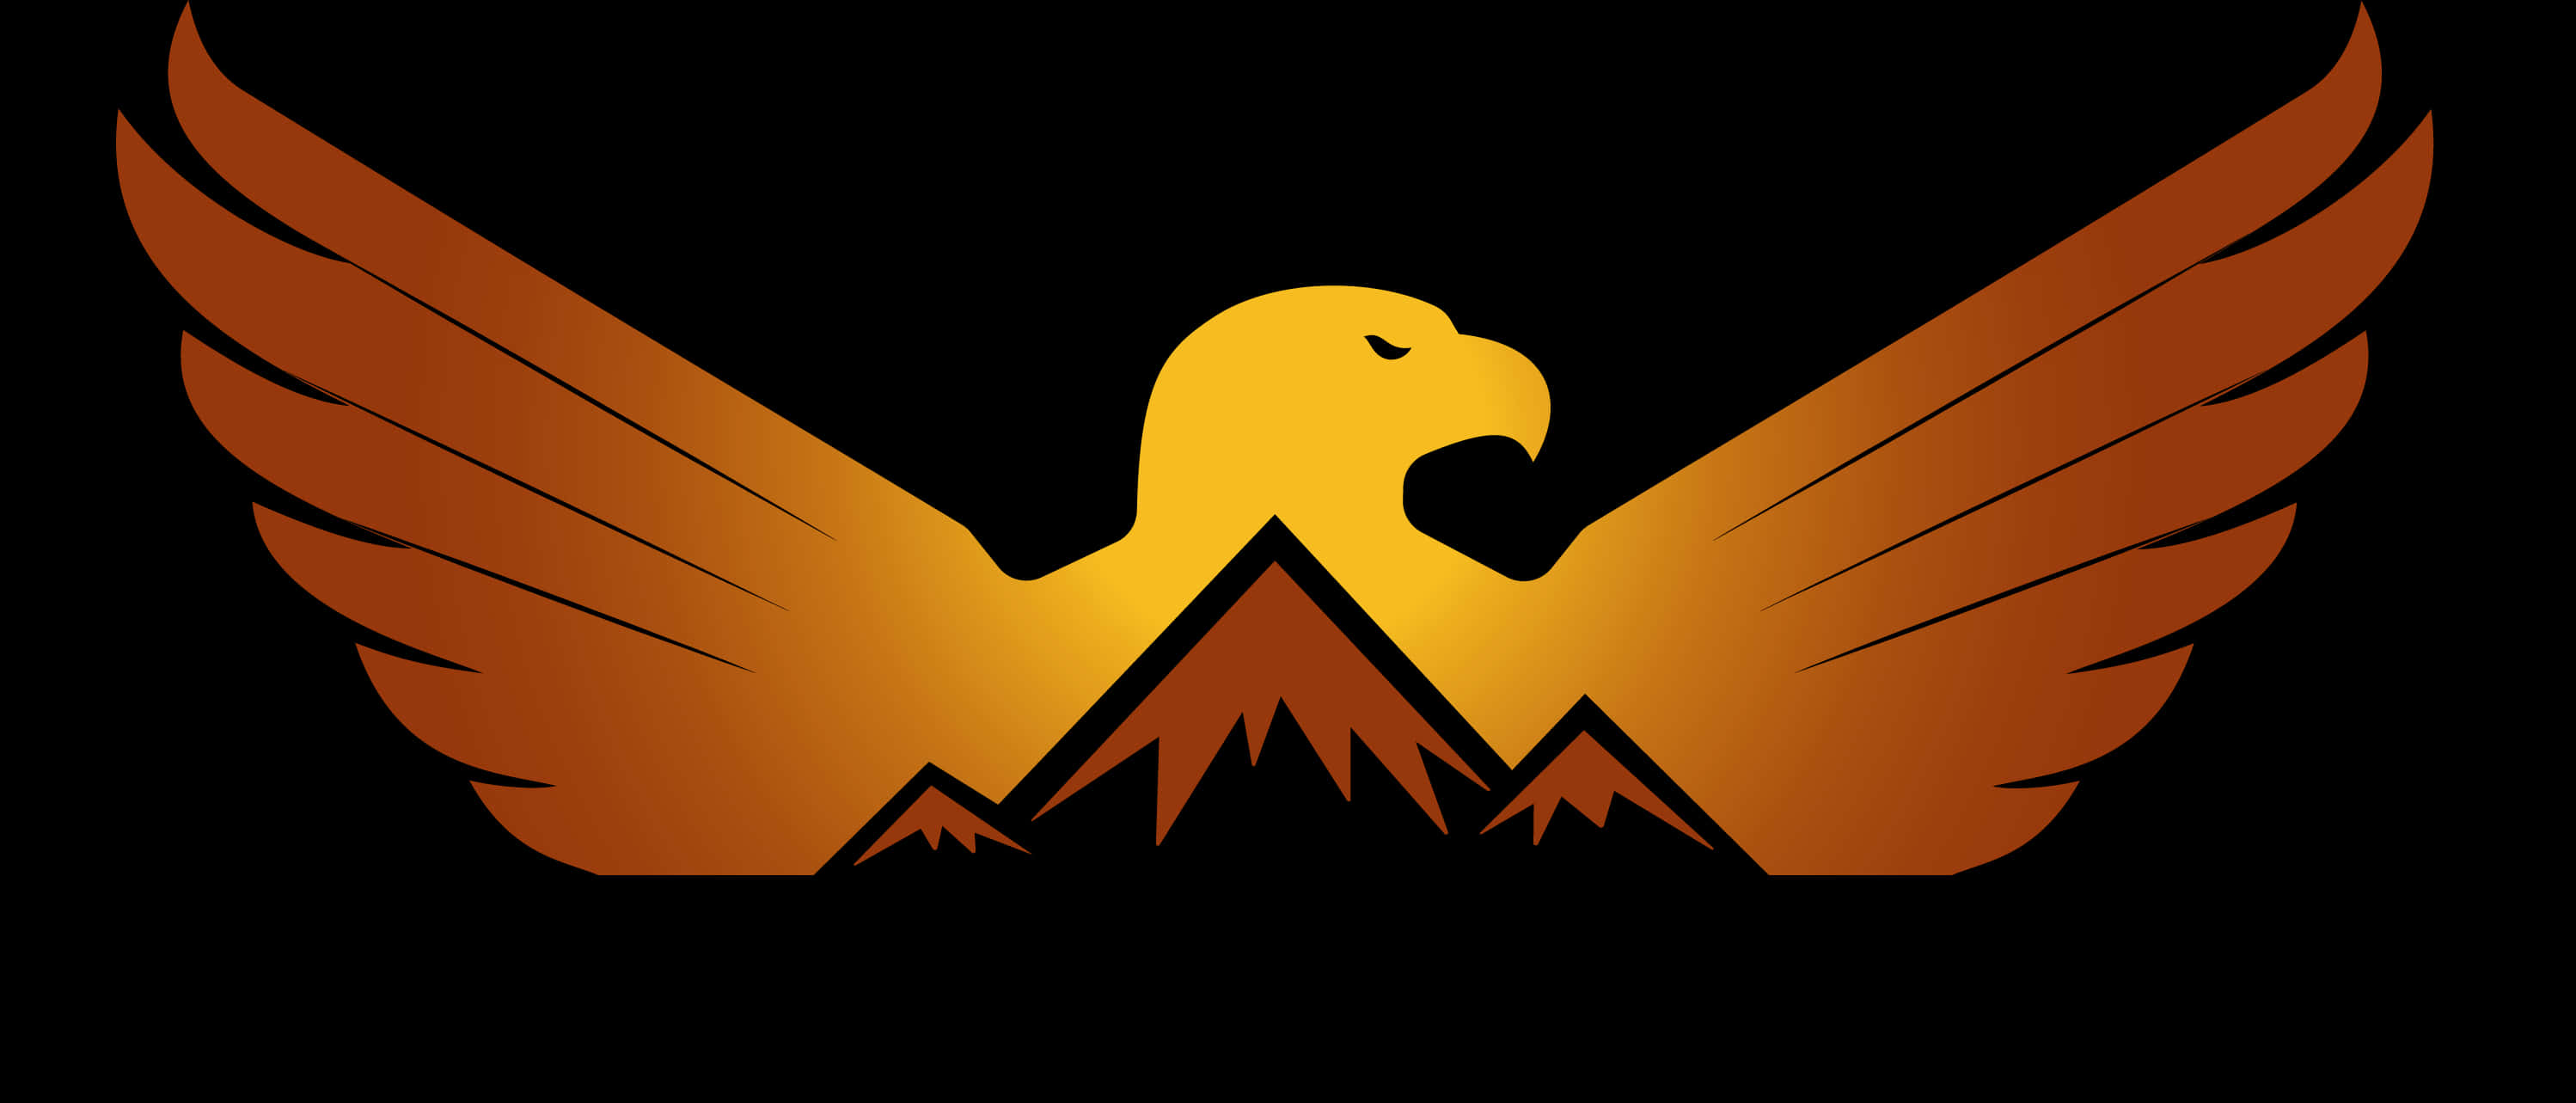 Golden Eagle Silhouette Logo